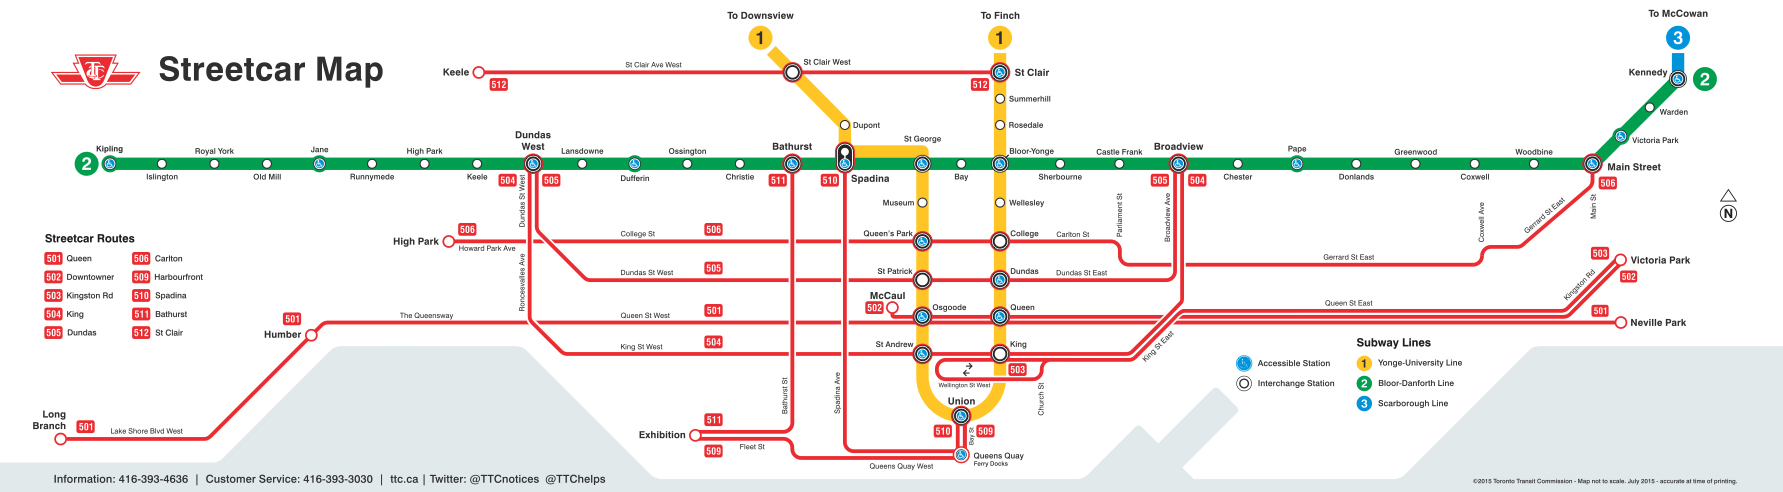 TTC transit and streetcar map in Toronto